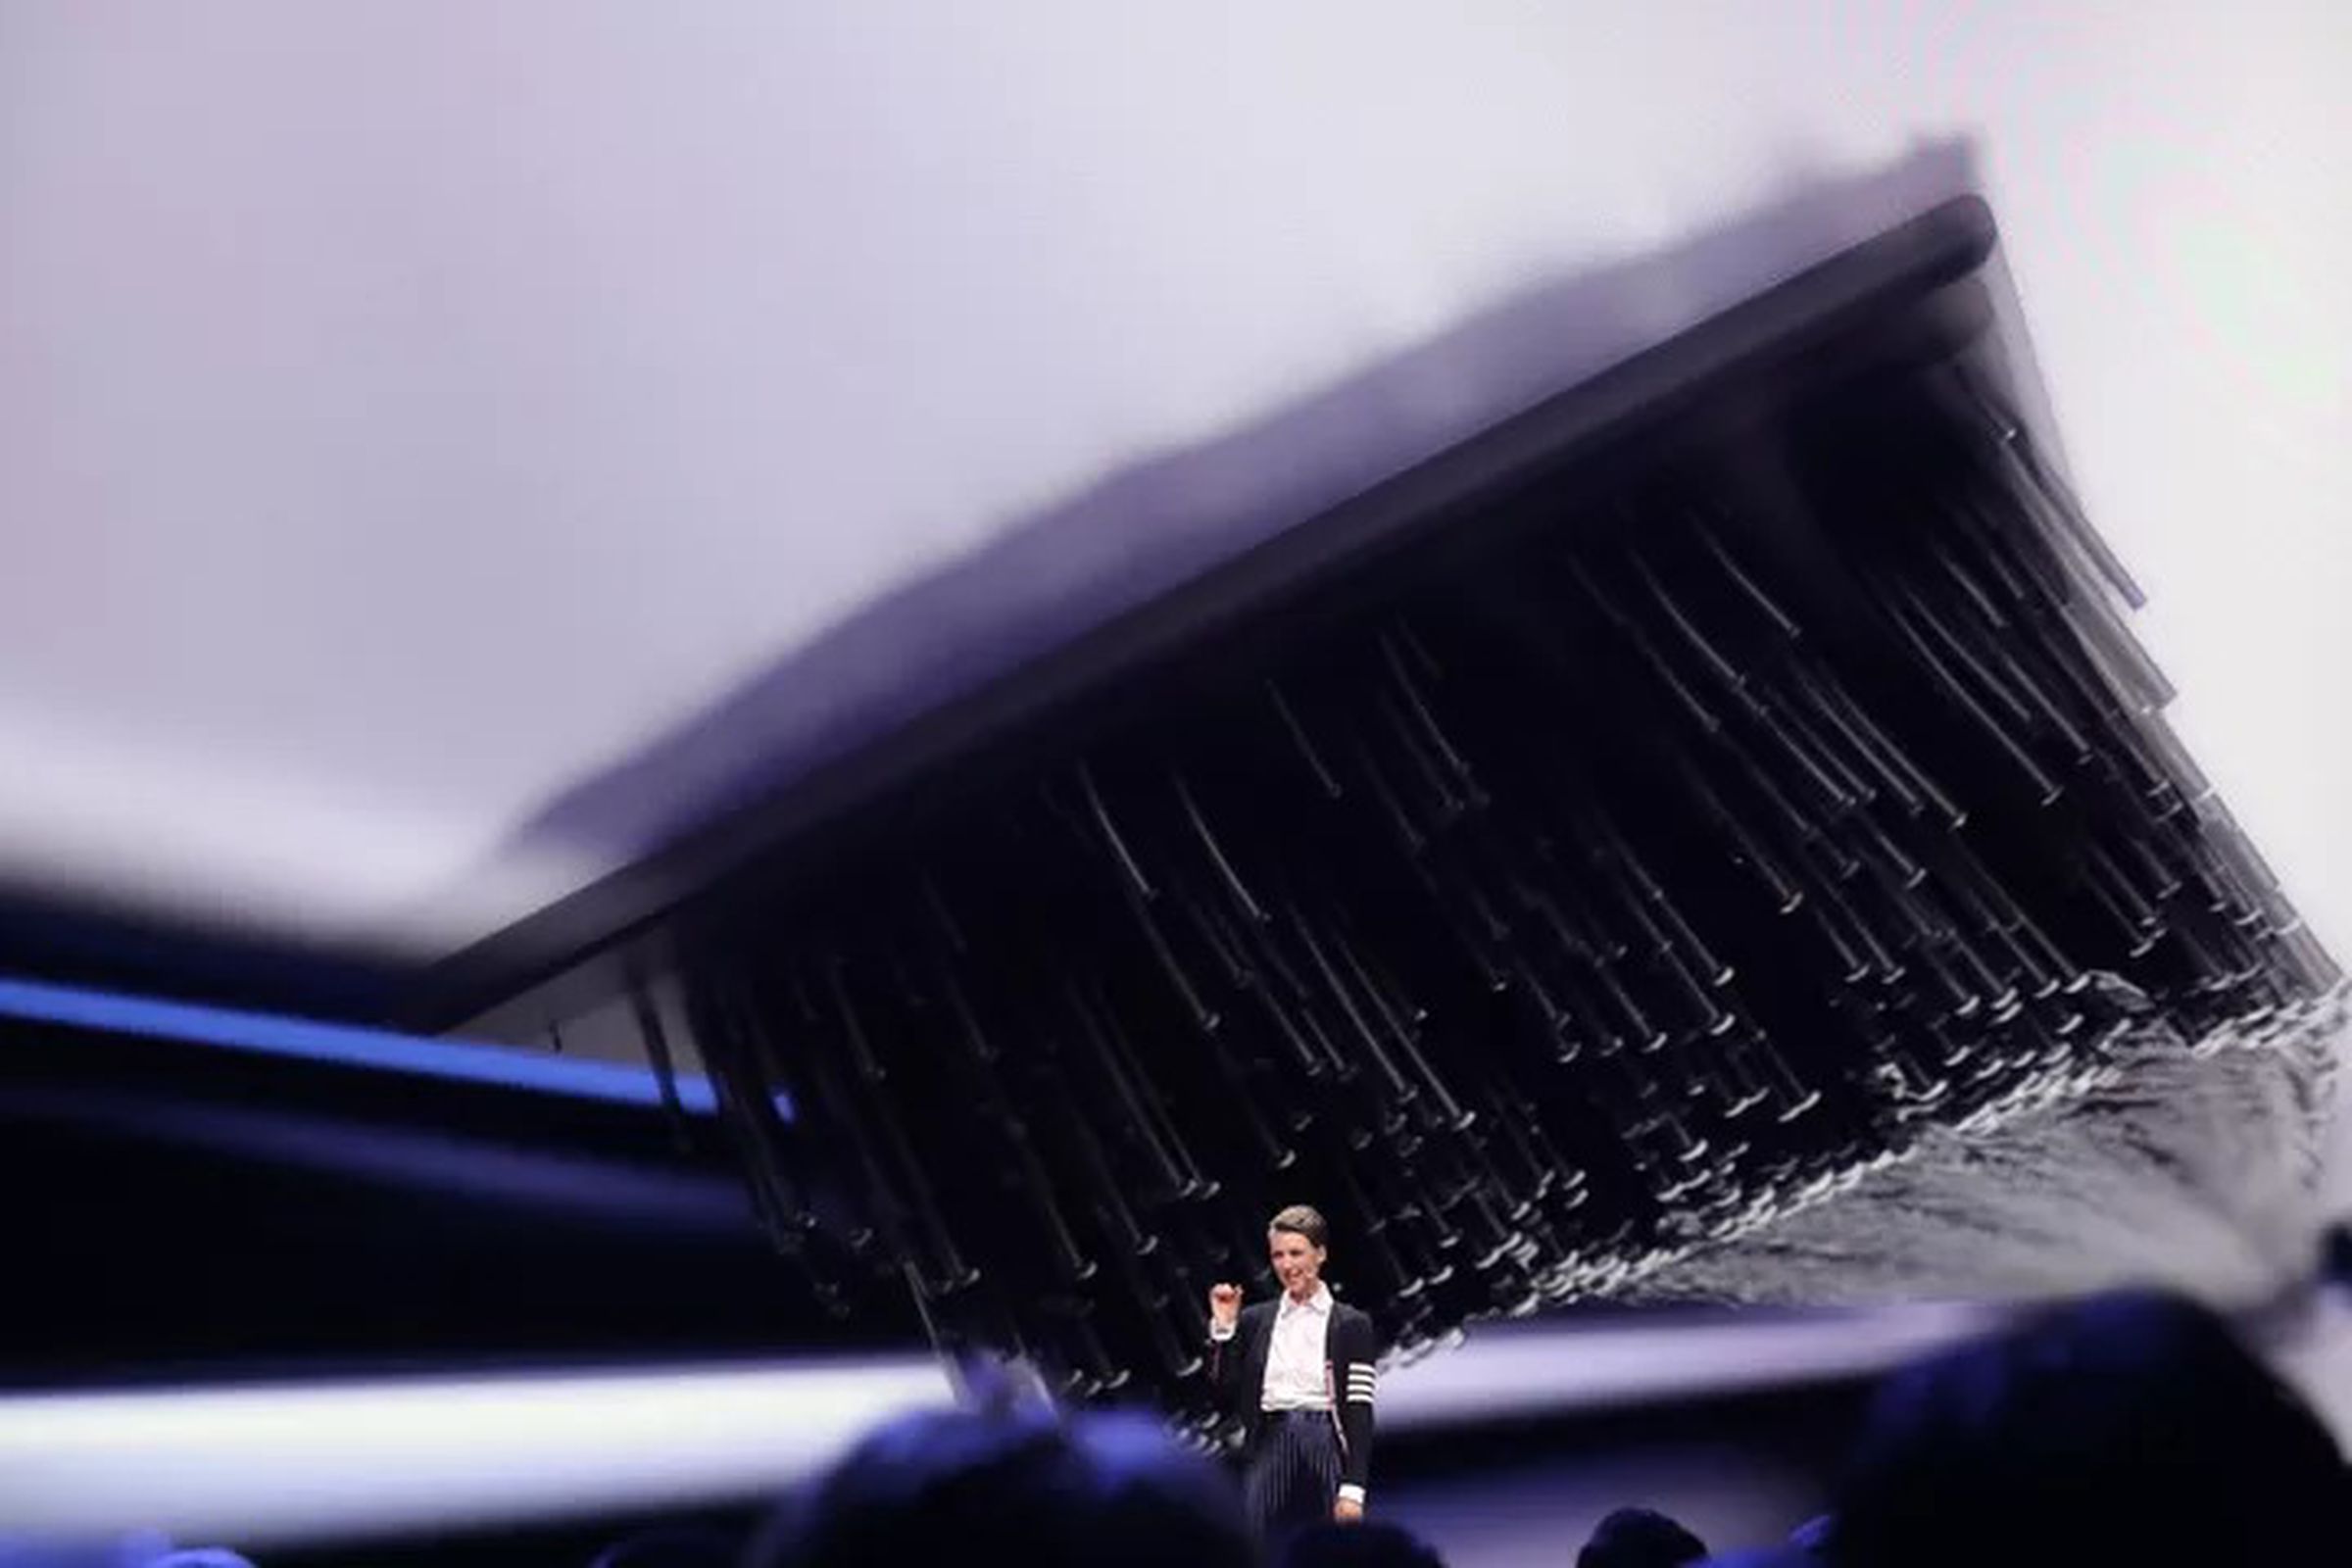 Samsung’s marketing image of the fiber shield.